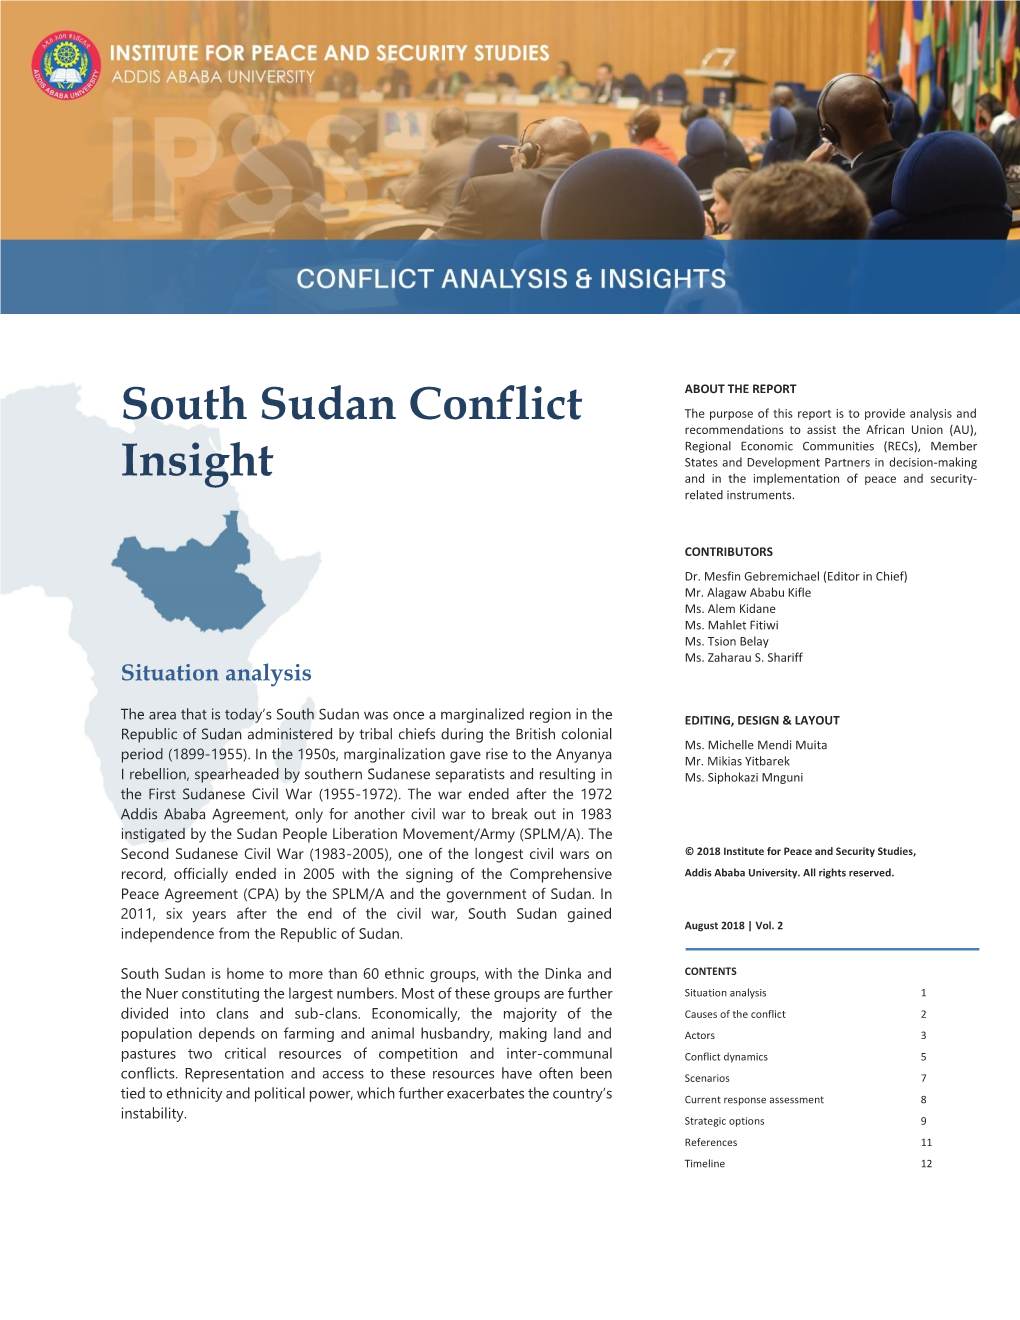 South Sudan Conflict Insight | Aug 2018 | Vol